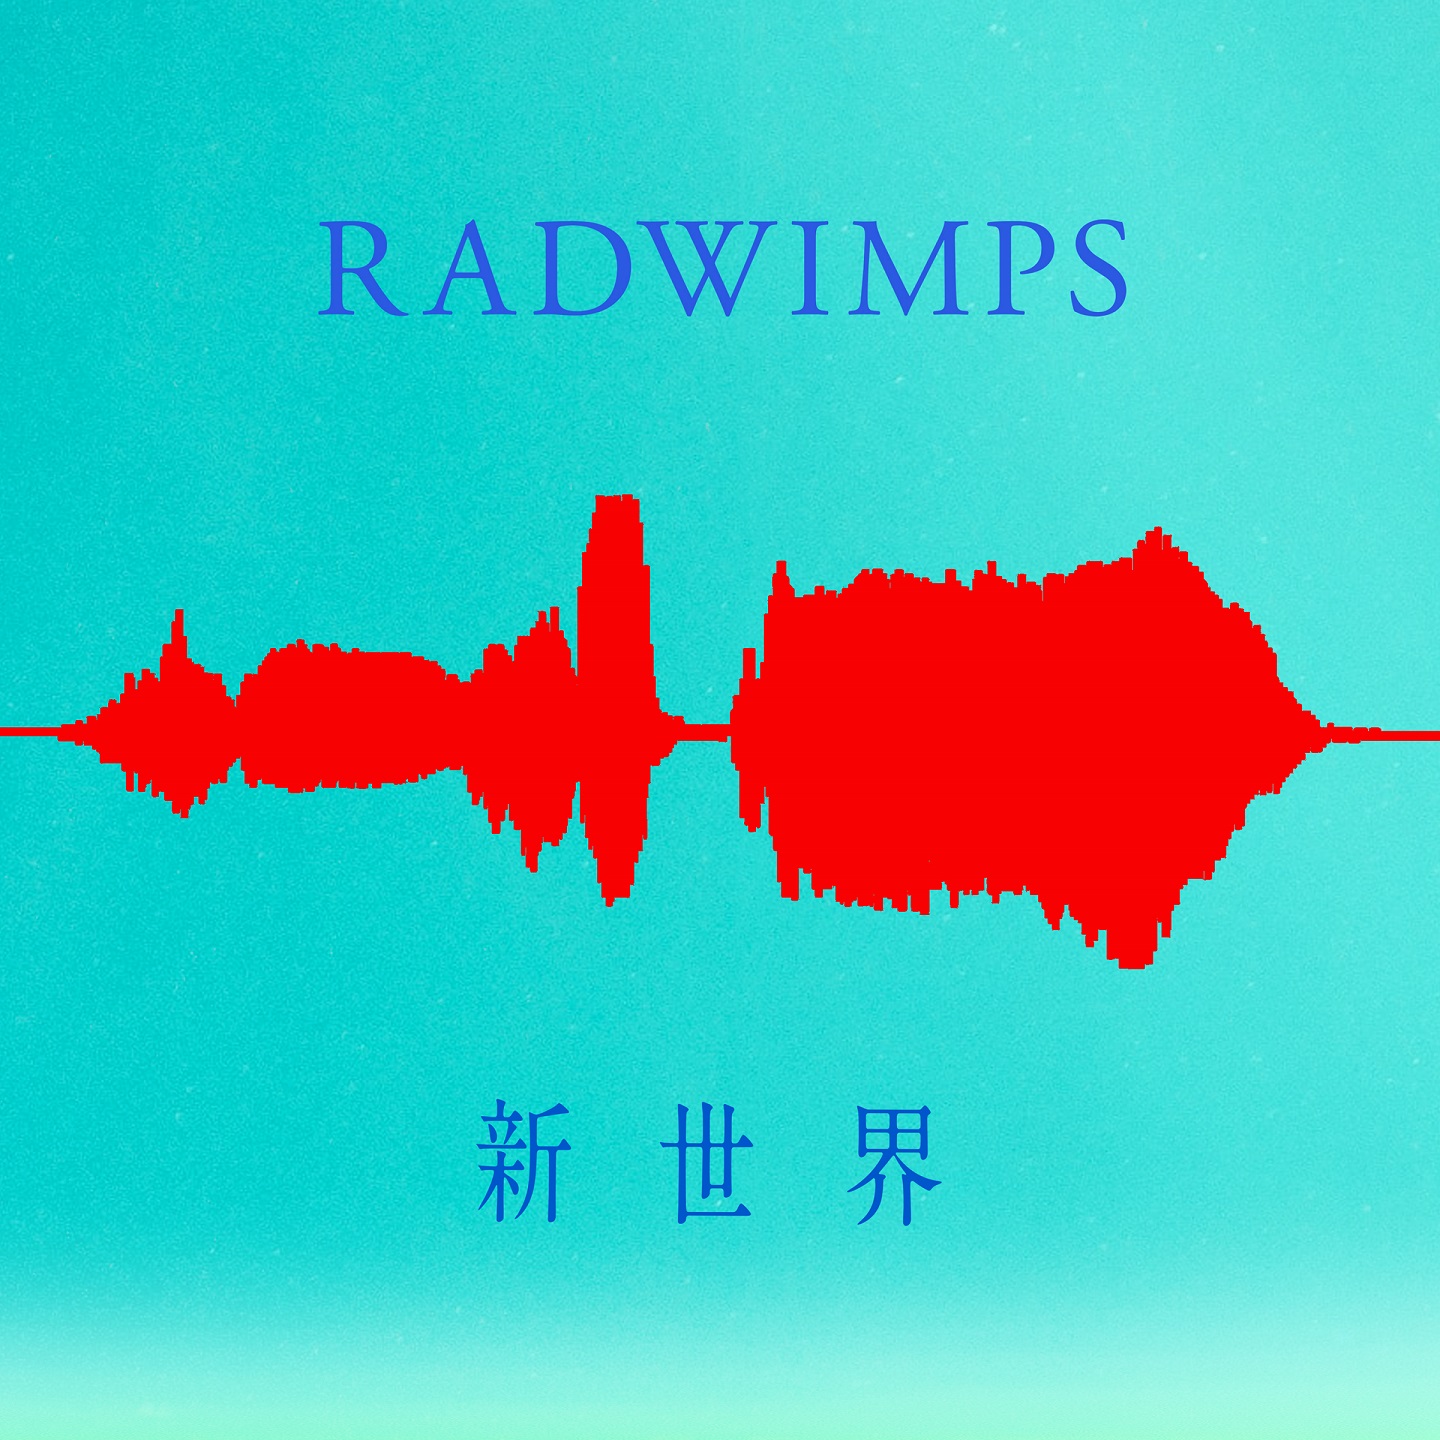 Radwimps ニューアルバム 天気の子 主題歌5曲のタイトルを解禁 Moshi Moshi Nippon もしもしにっぽん